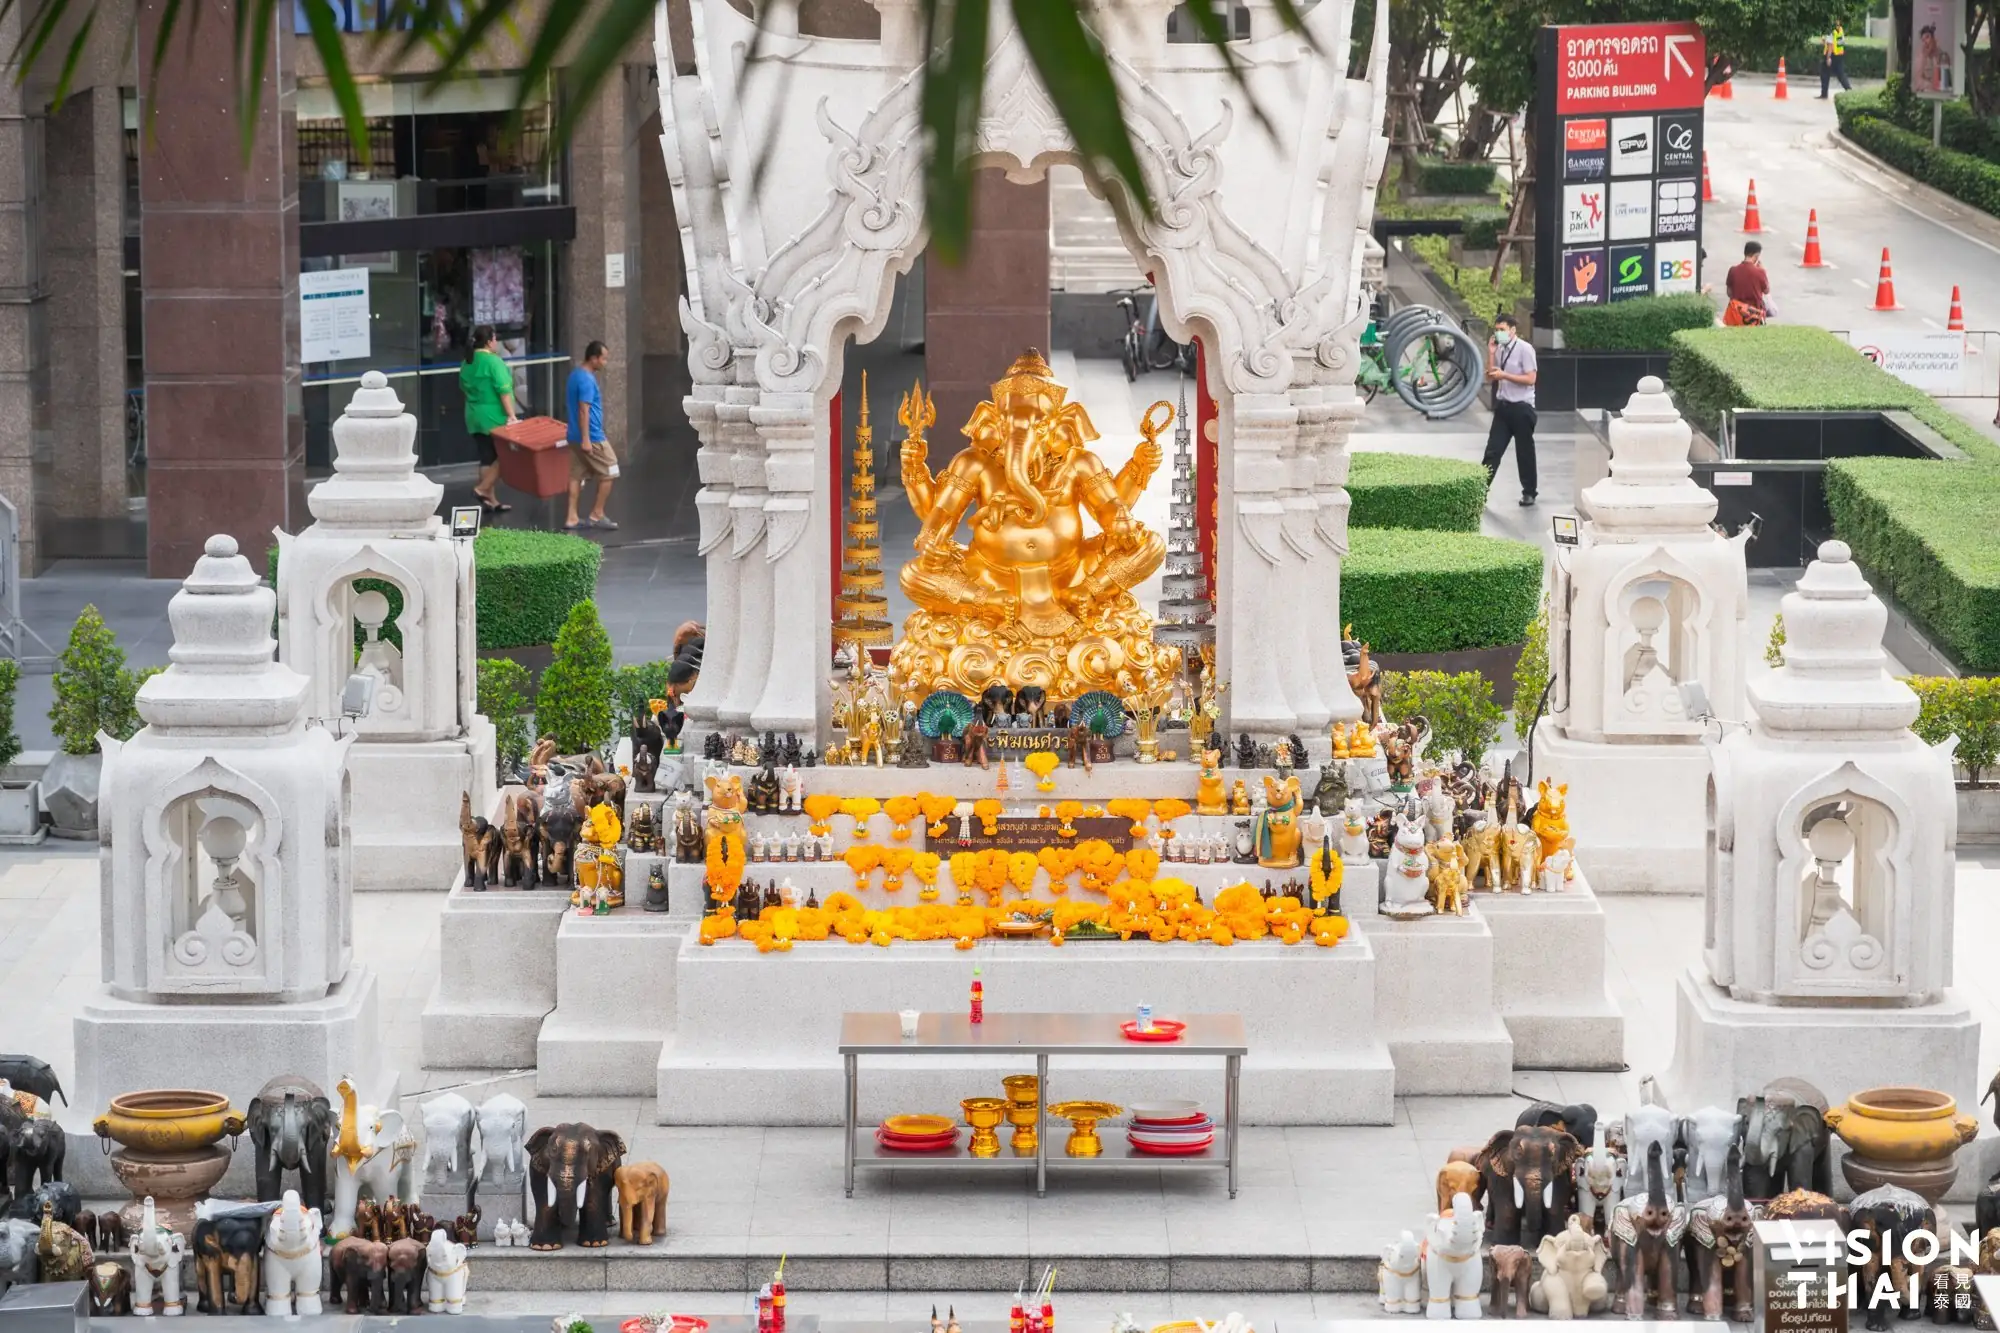 曼谷centralwOrld廣場的象神（VISION THAI 看見泰國）